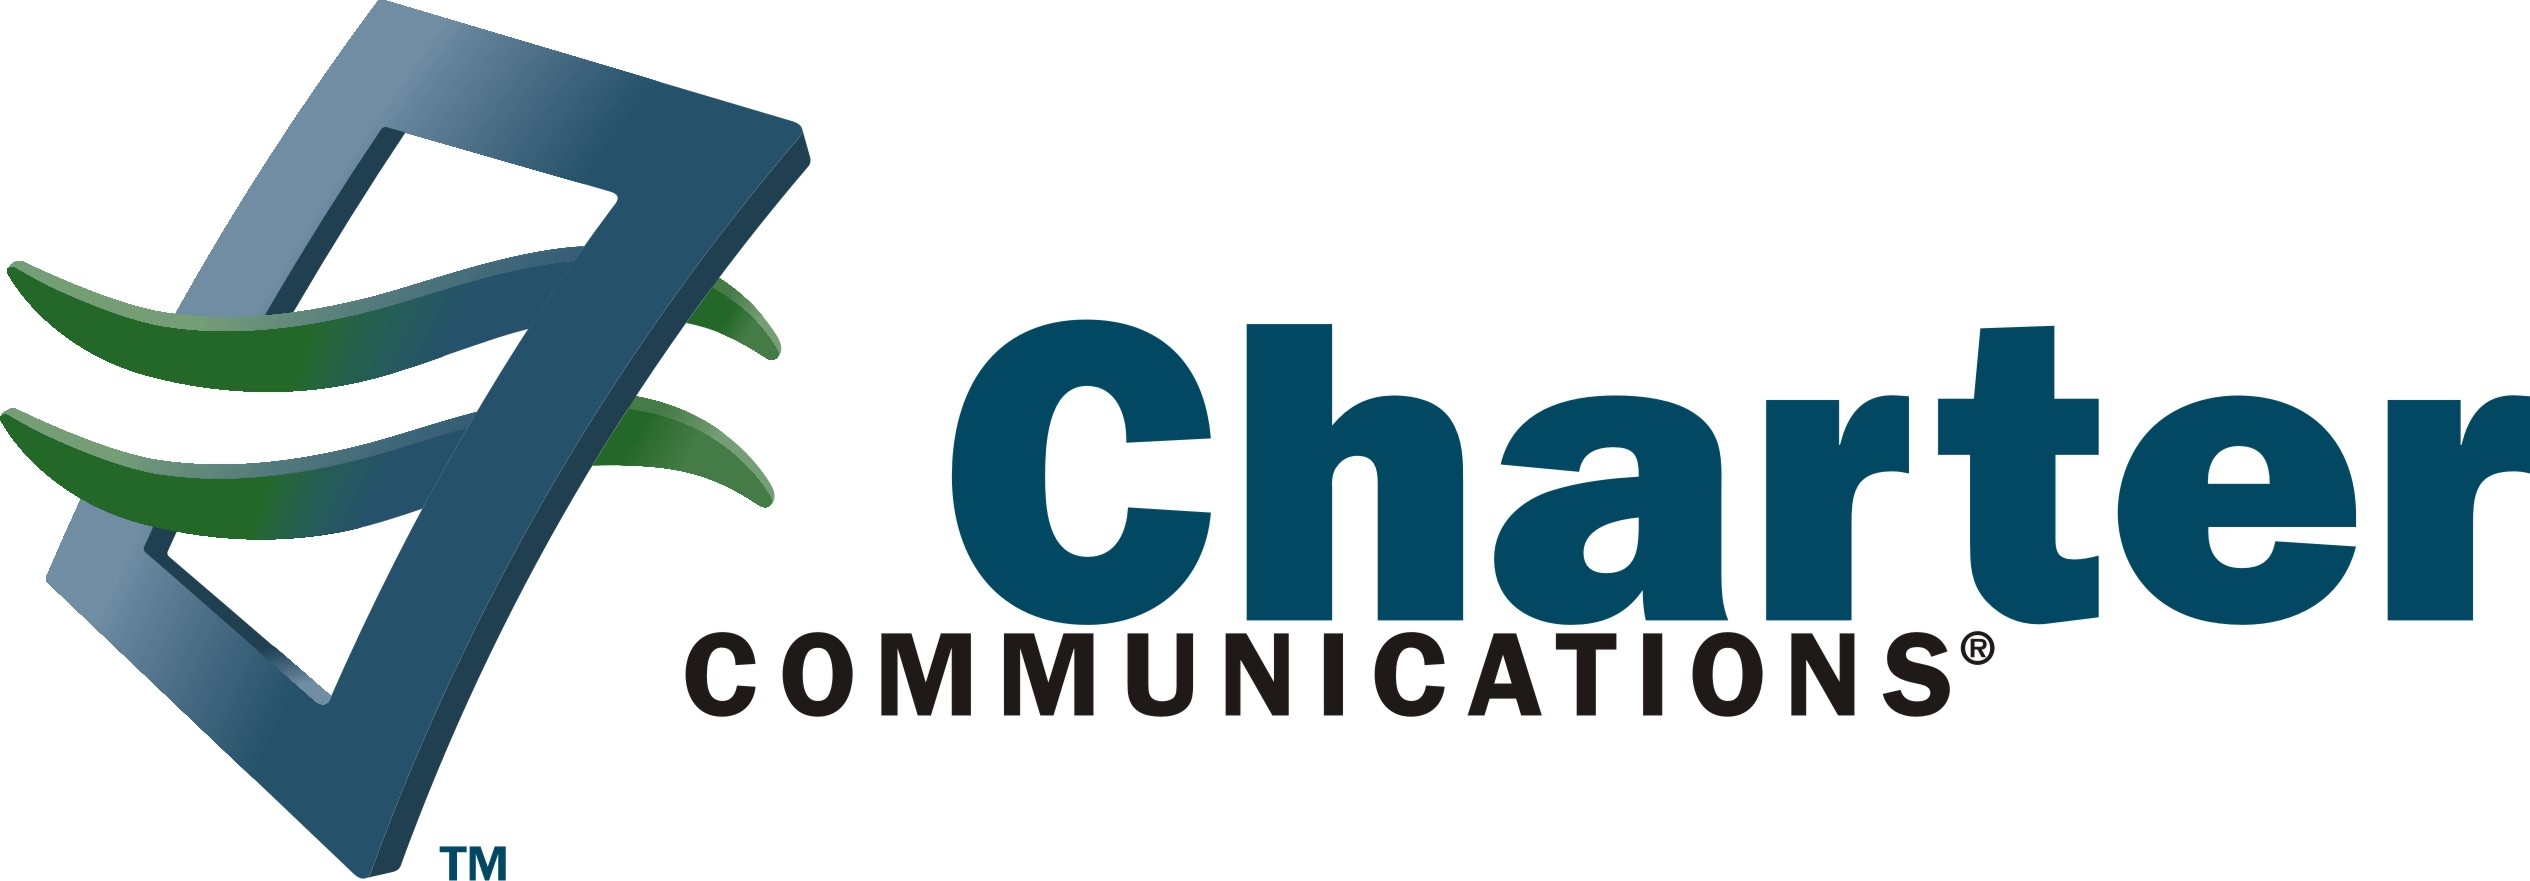 Charter Communications Logo photo - 1